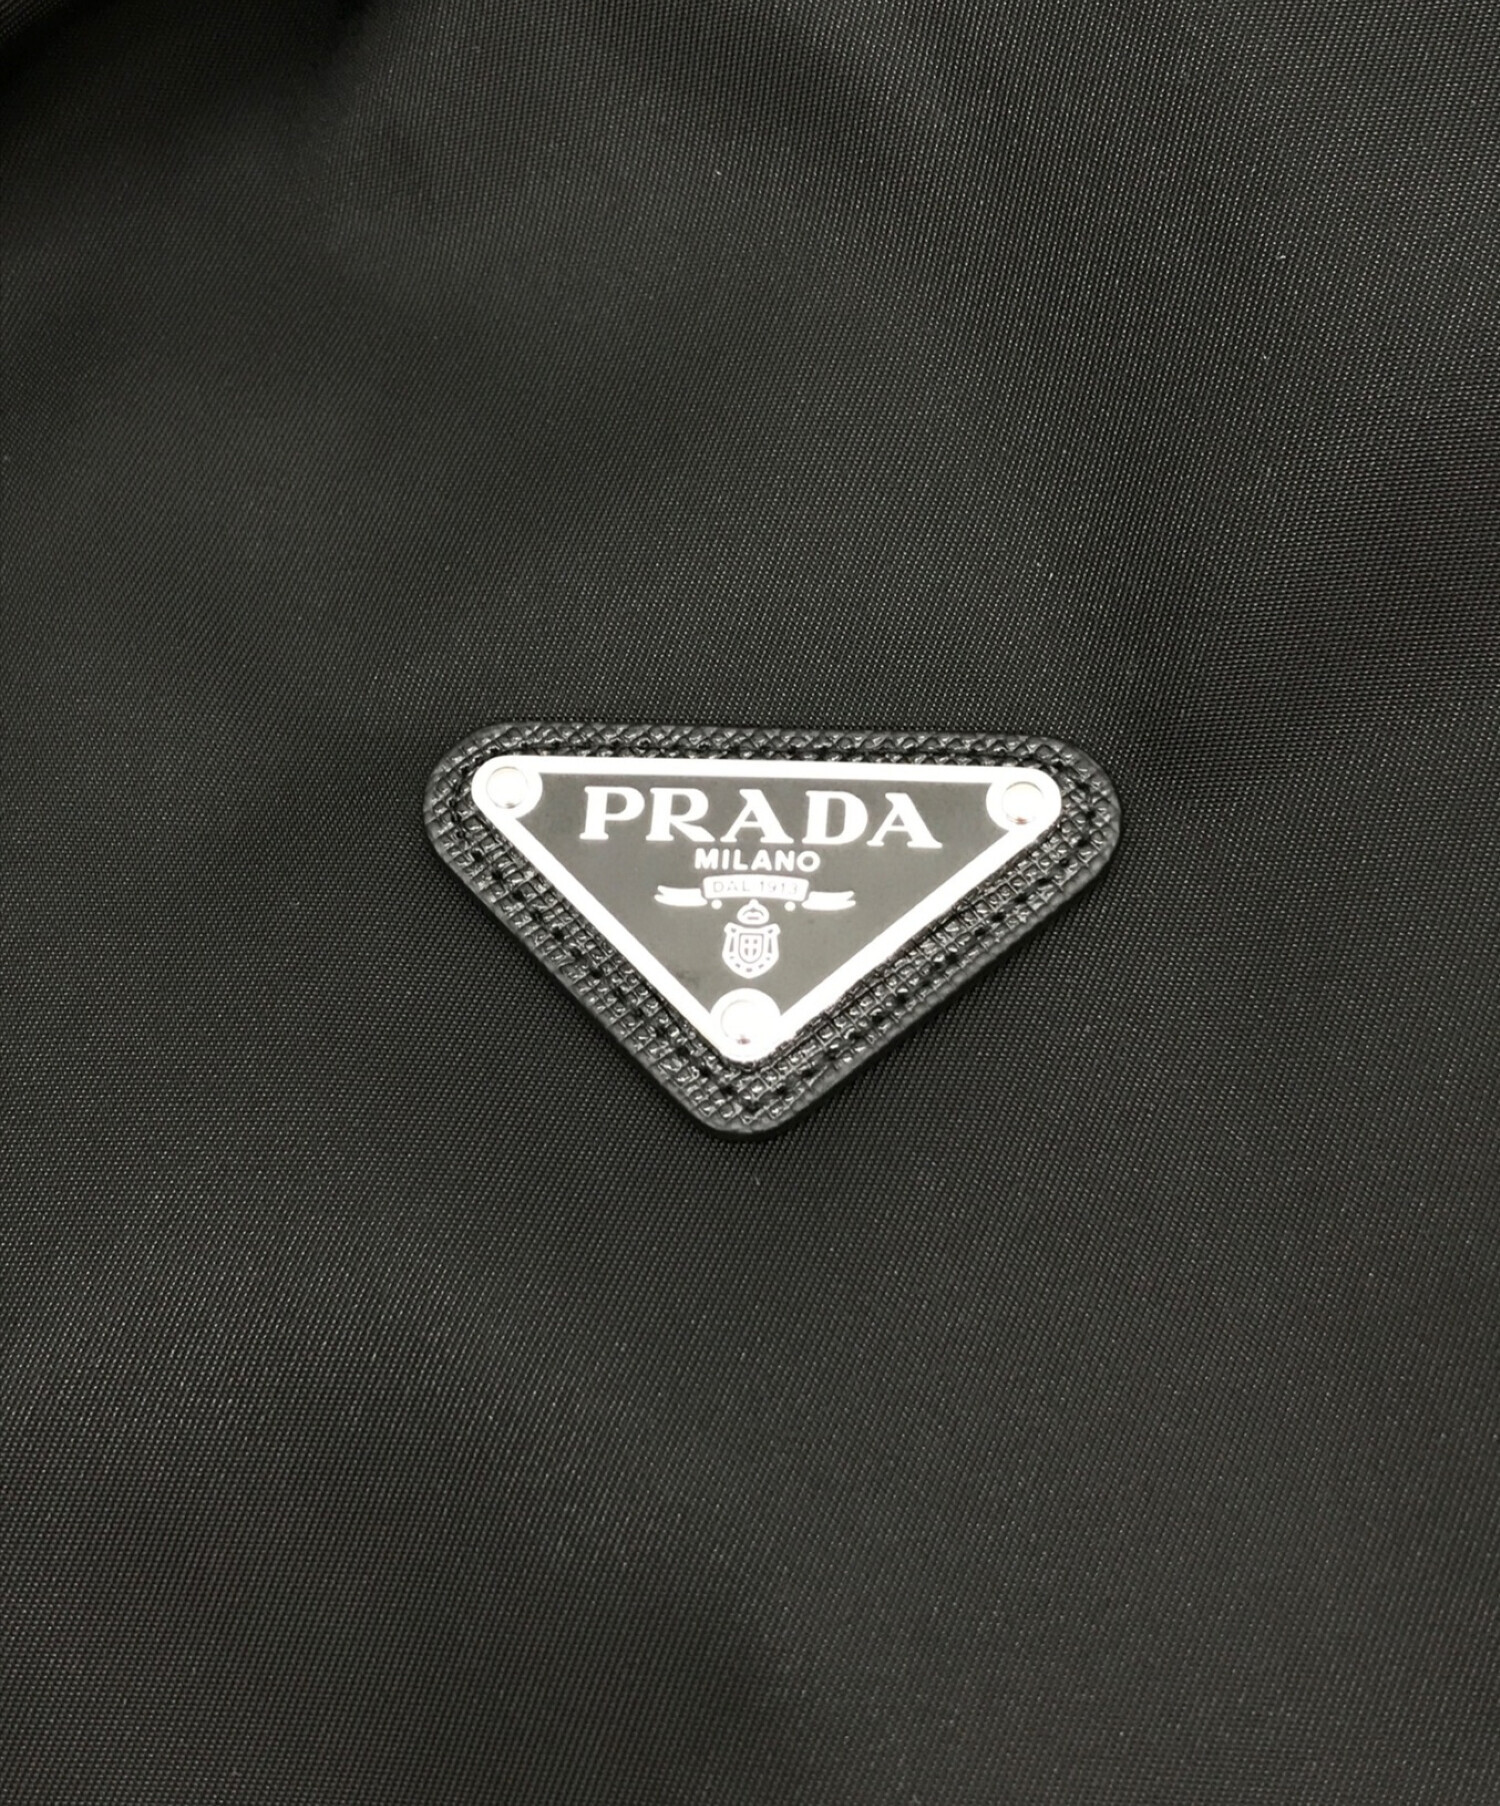 PRADA プラダ ニットパーカー 三角プレートカラーブラック - パーカー